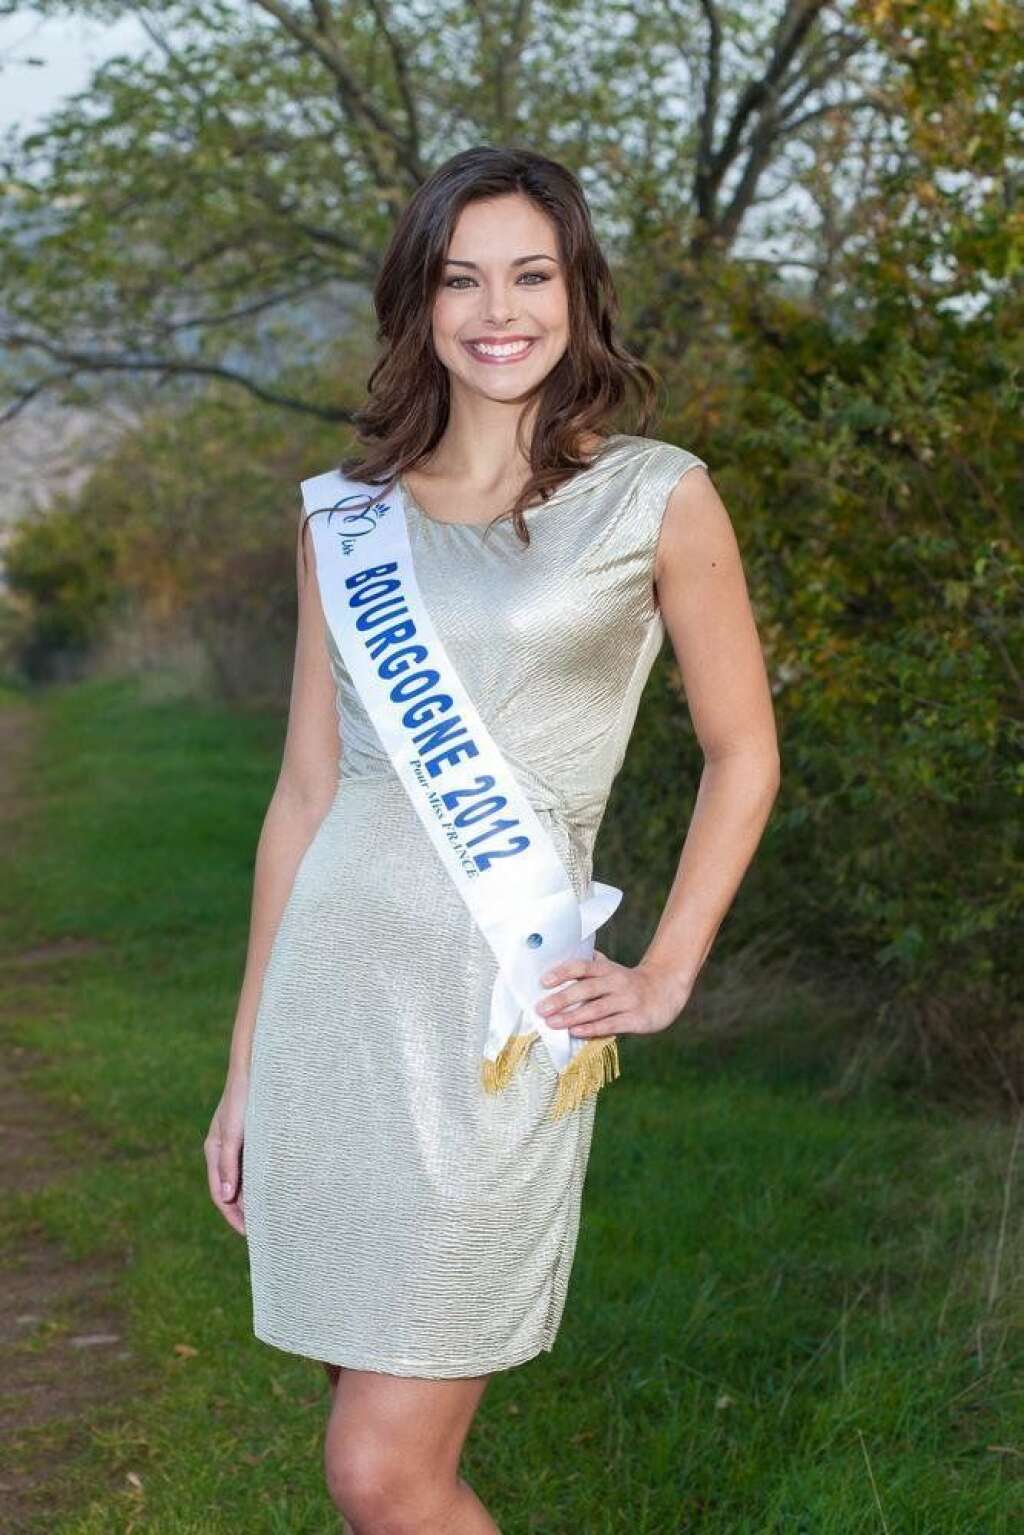 Miss Bourgogne - Marine Lorphelin    19 ans - 1,76 m    Etudiante en médecine